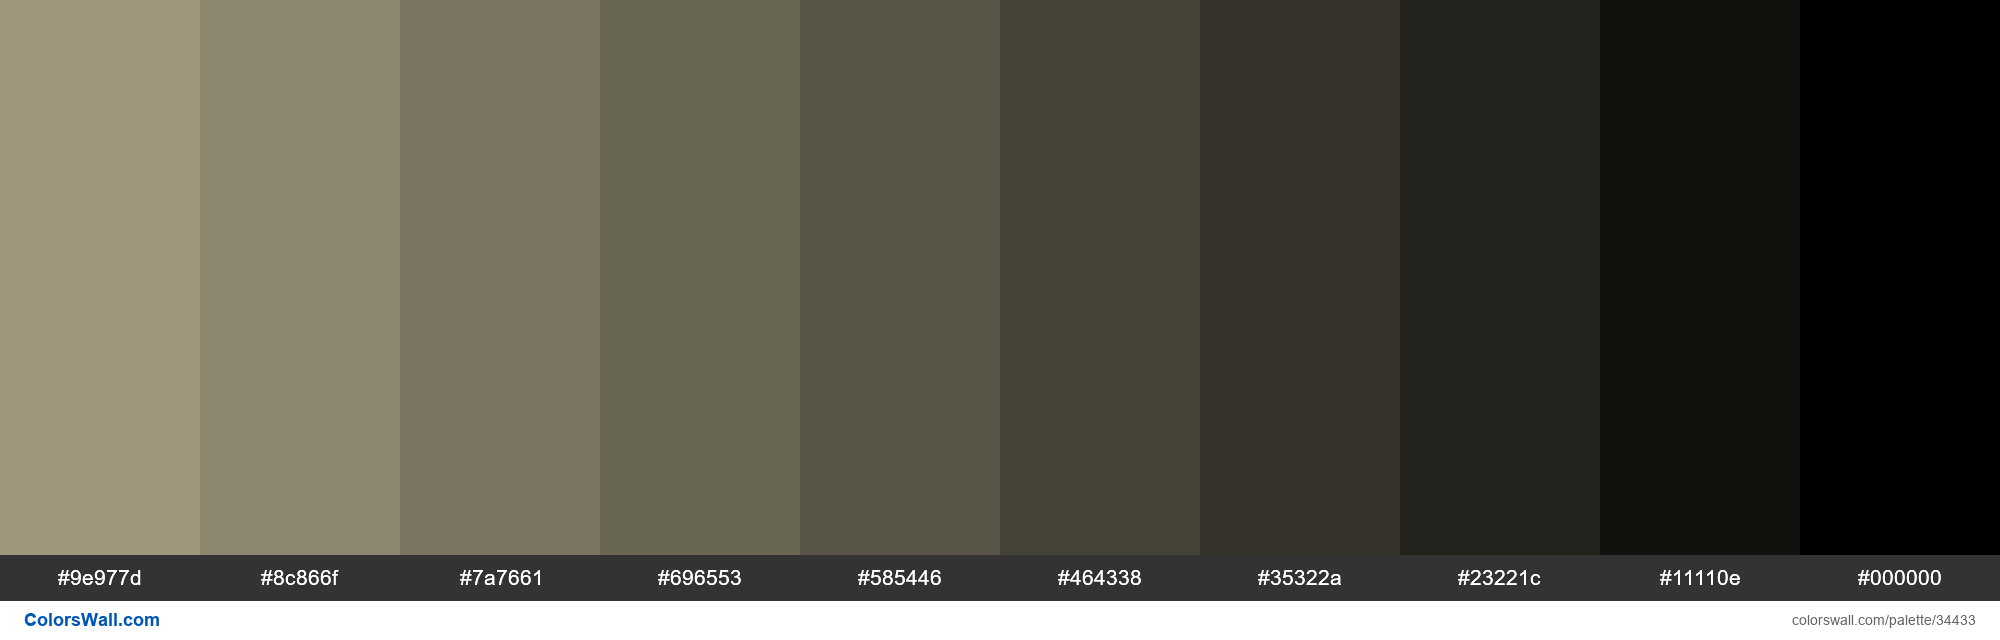 C5EAFA Hex Color, RGB: 197, 234, 250